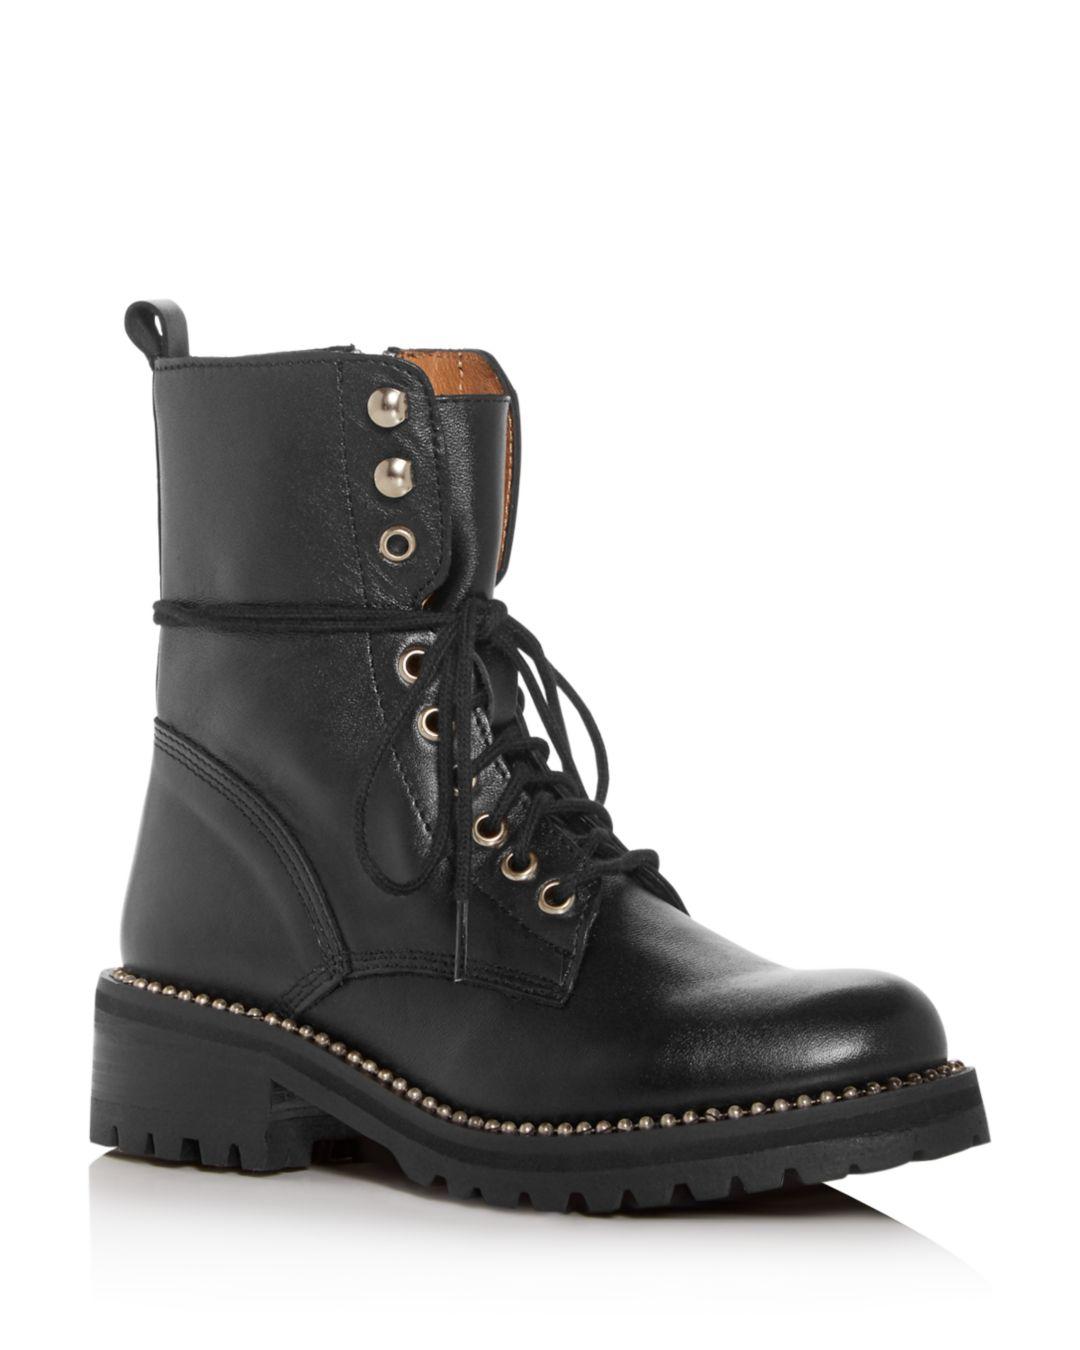 Aqua Leather Women's Jax Combat Boots in Black Leather (Black) - Lyst